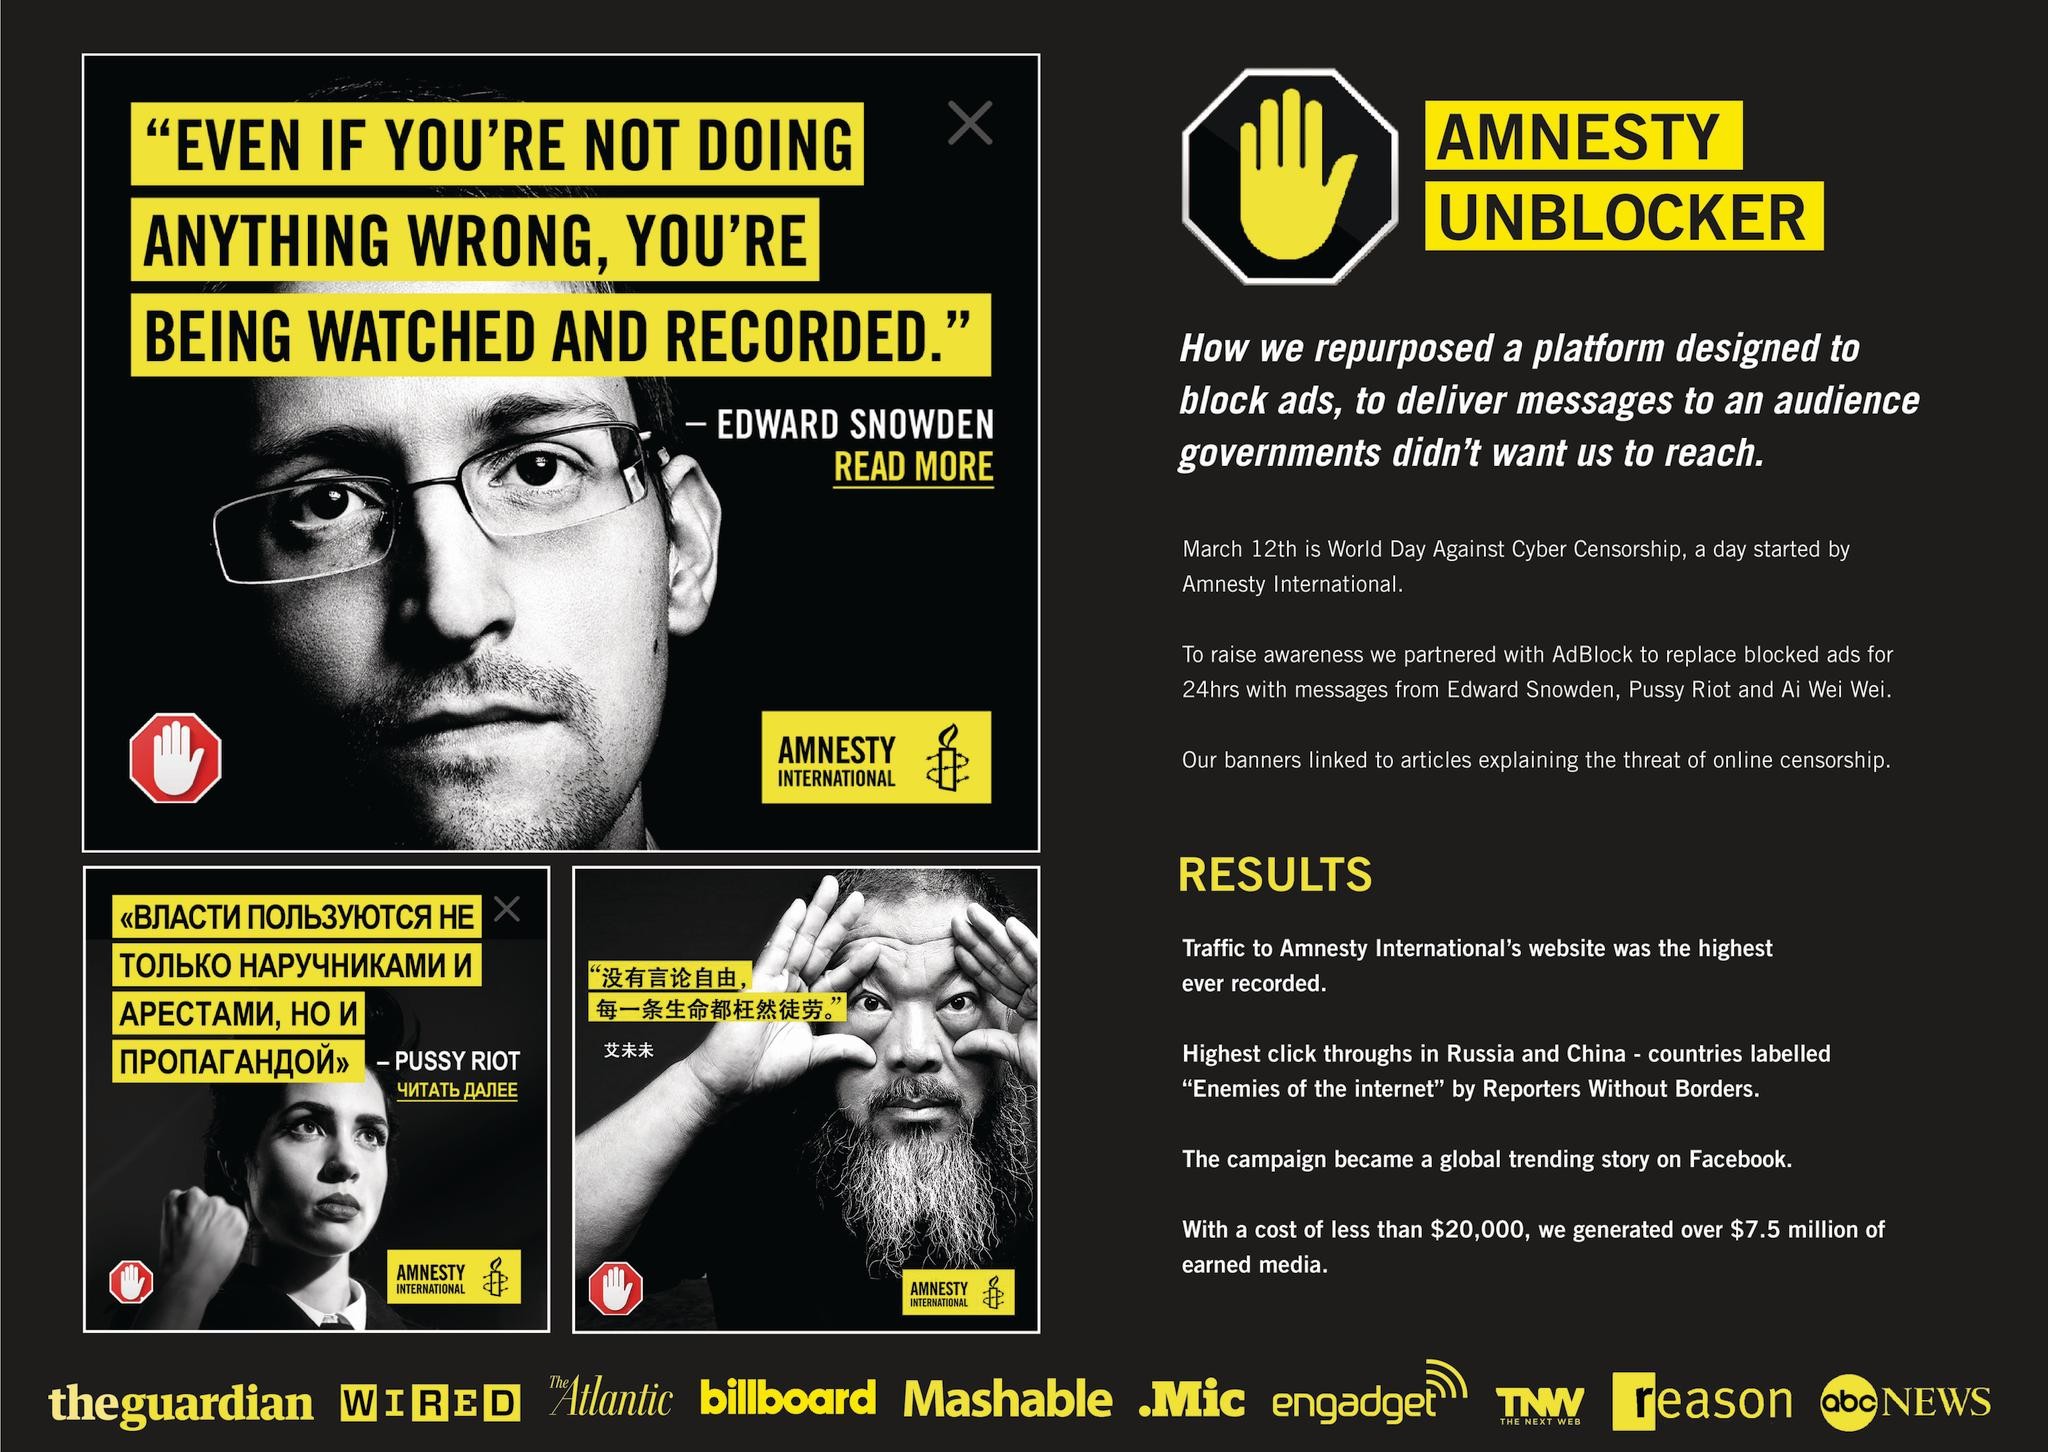 Amnesty International Unblocker